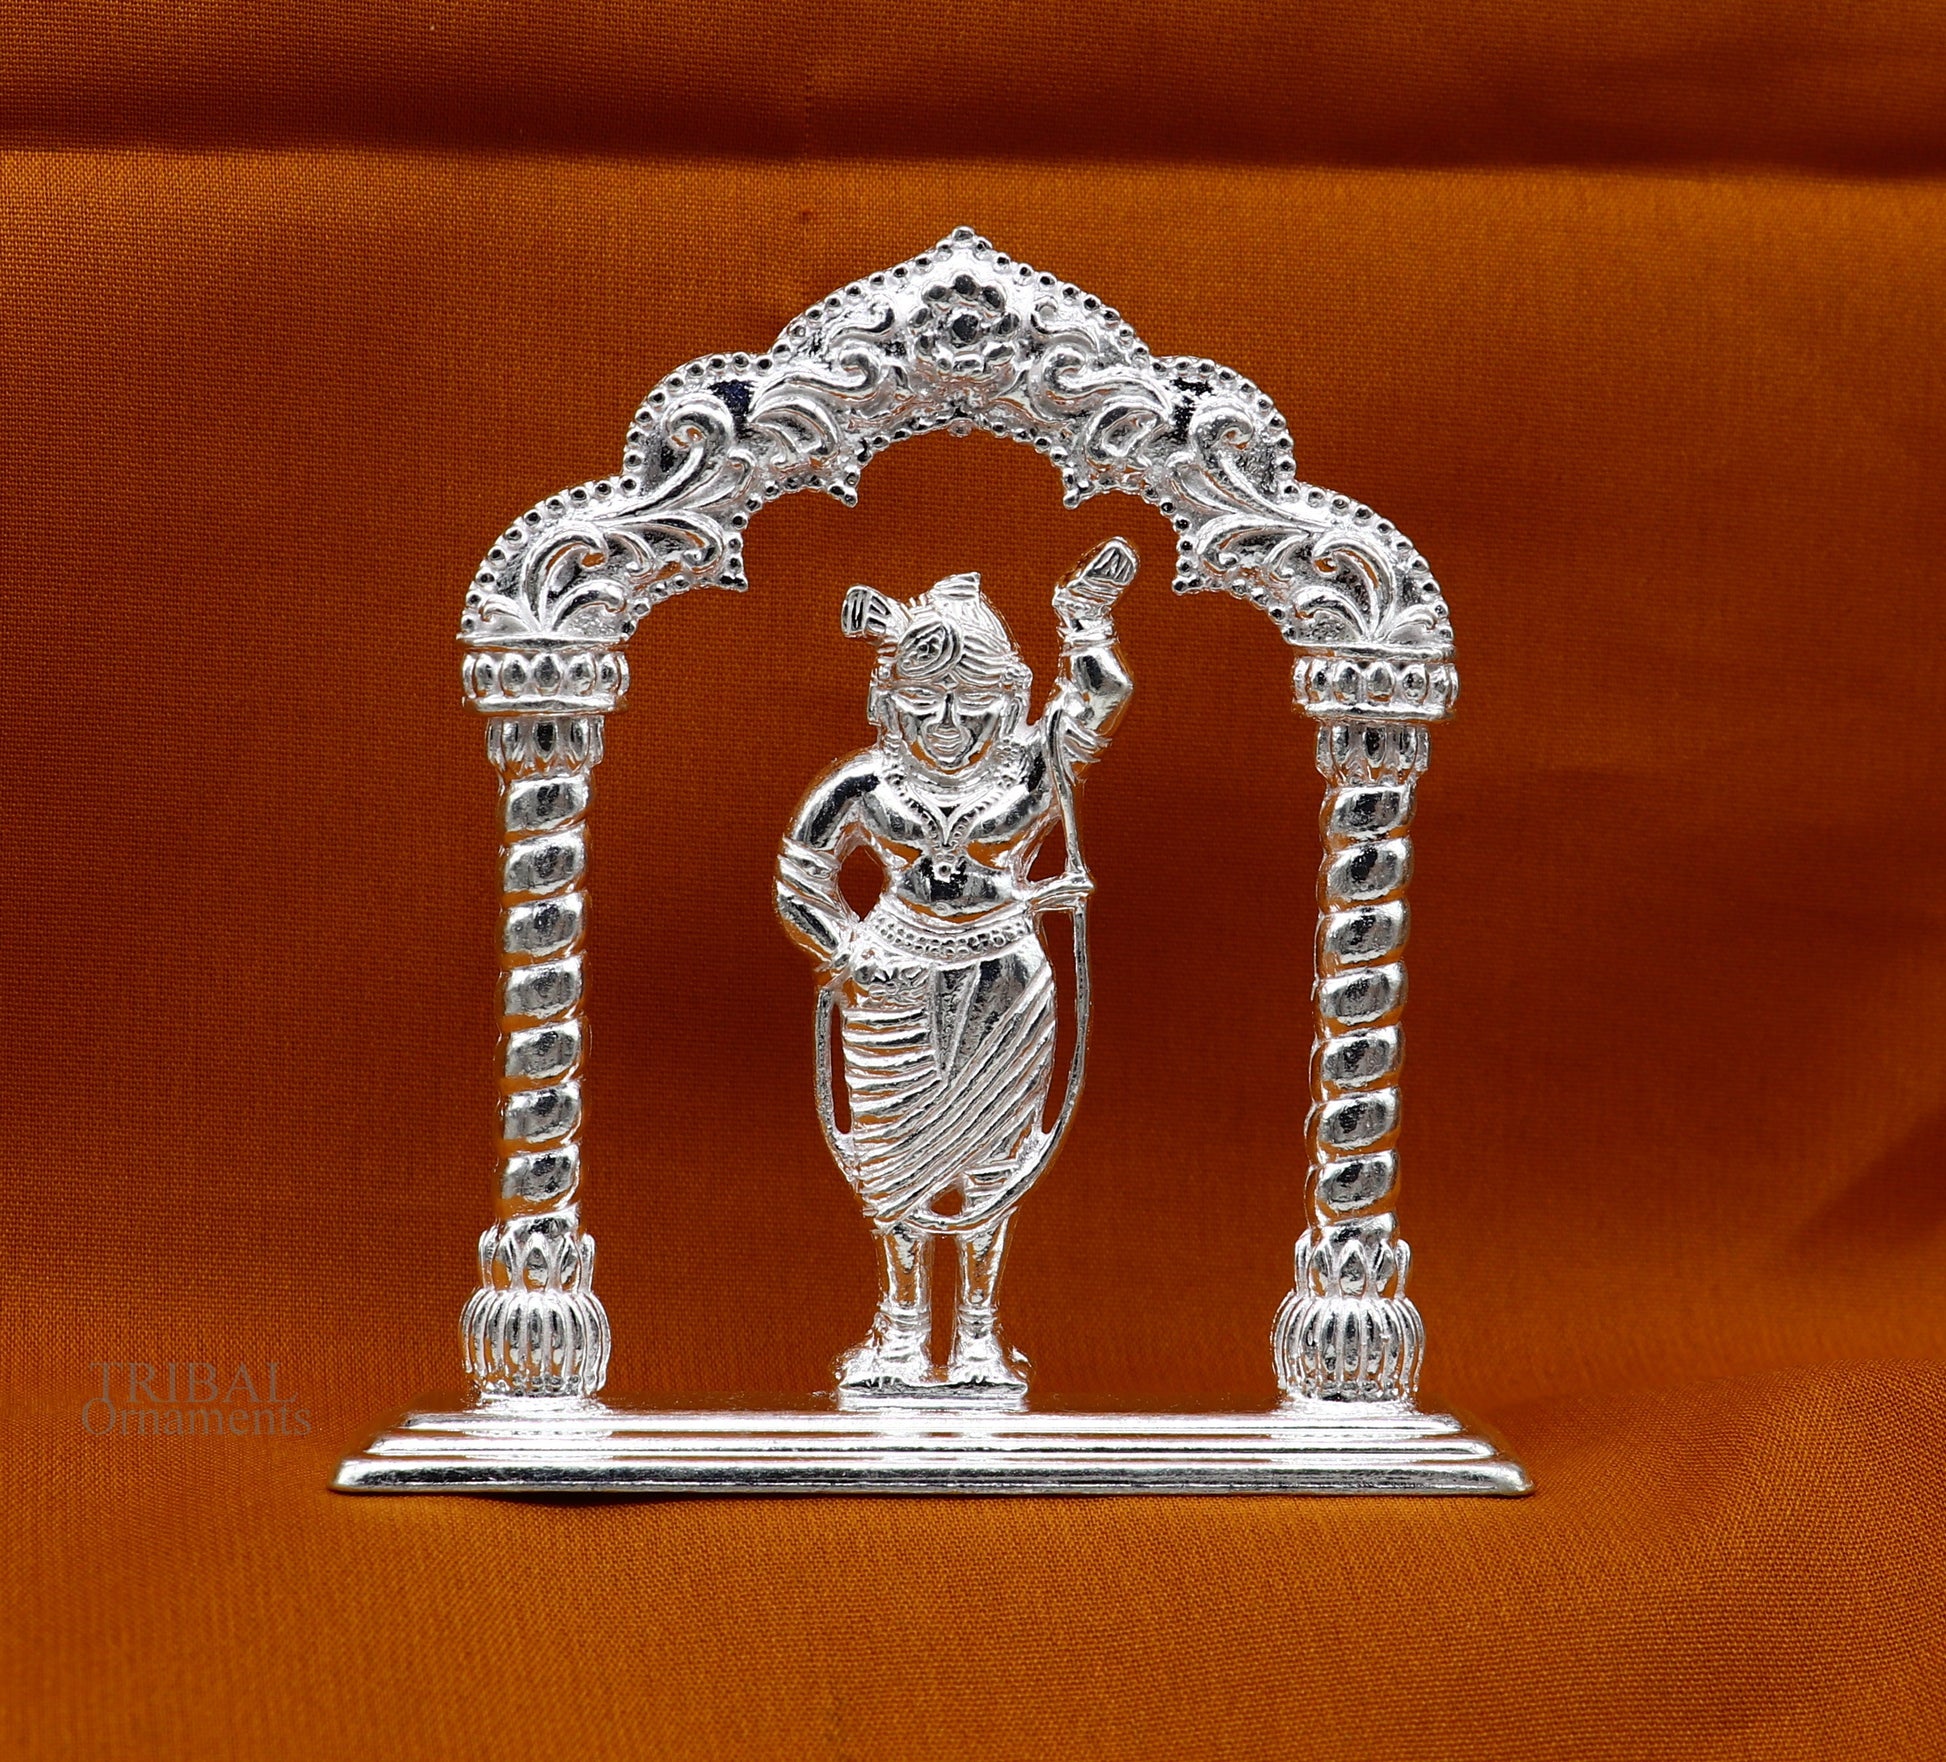 Sterling silver handmade design Indian Idols Lord krishna Shrinathji statue figurine, puja articles decorative gift diwali puja art449 - TRIBAL ORNAMENTS